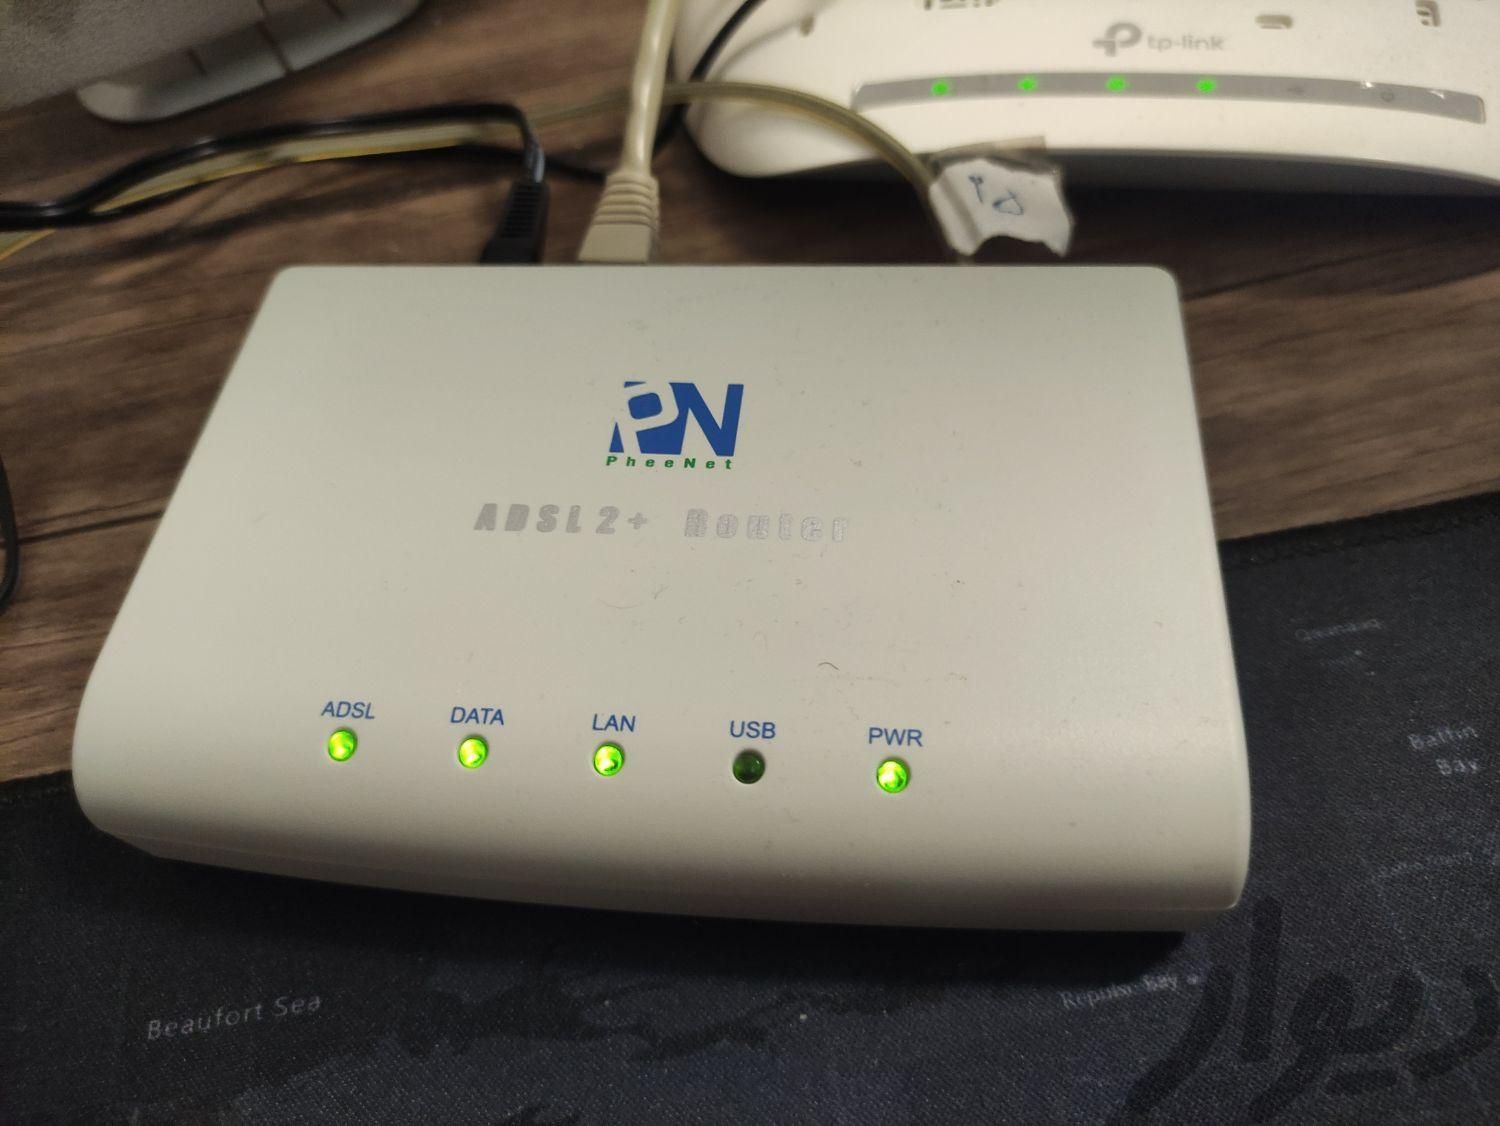 مودم ADSL+2 Router|مودم و تجهیزات شبکه رایانه|تهران, آبشار|دیوار